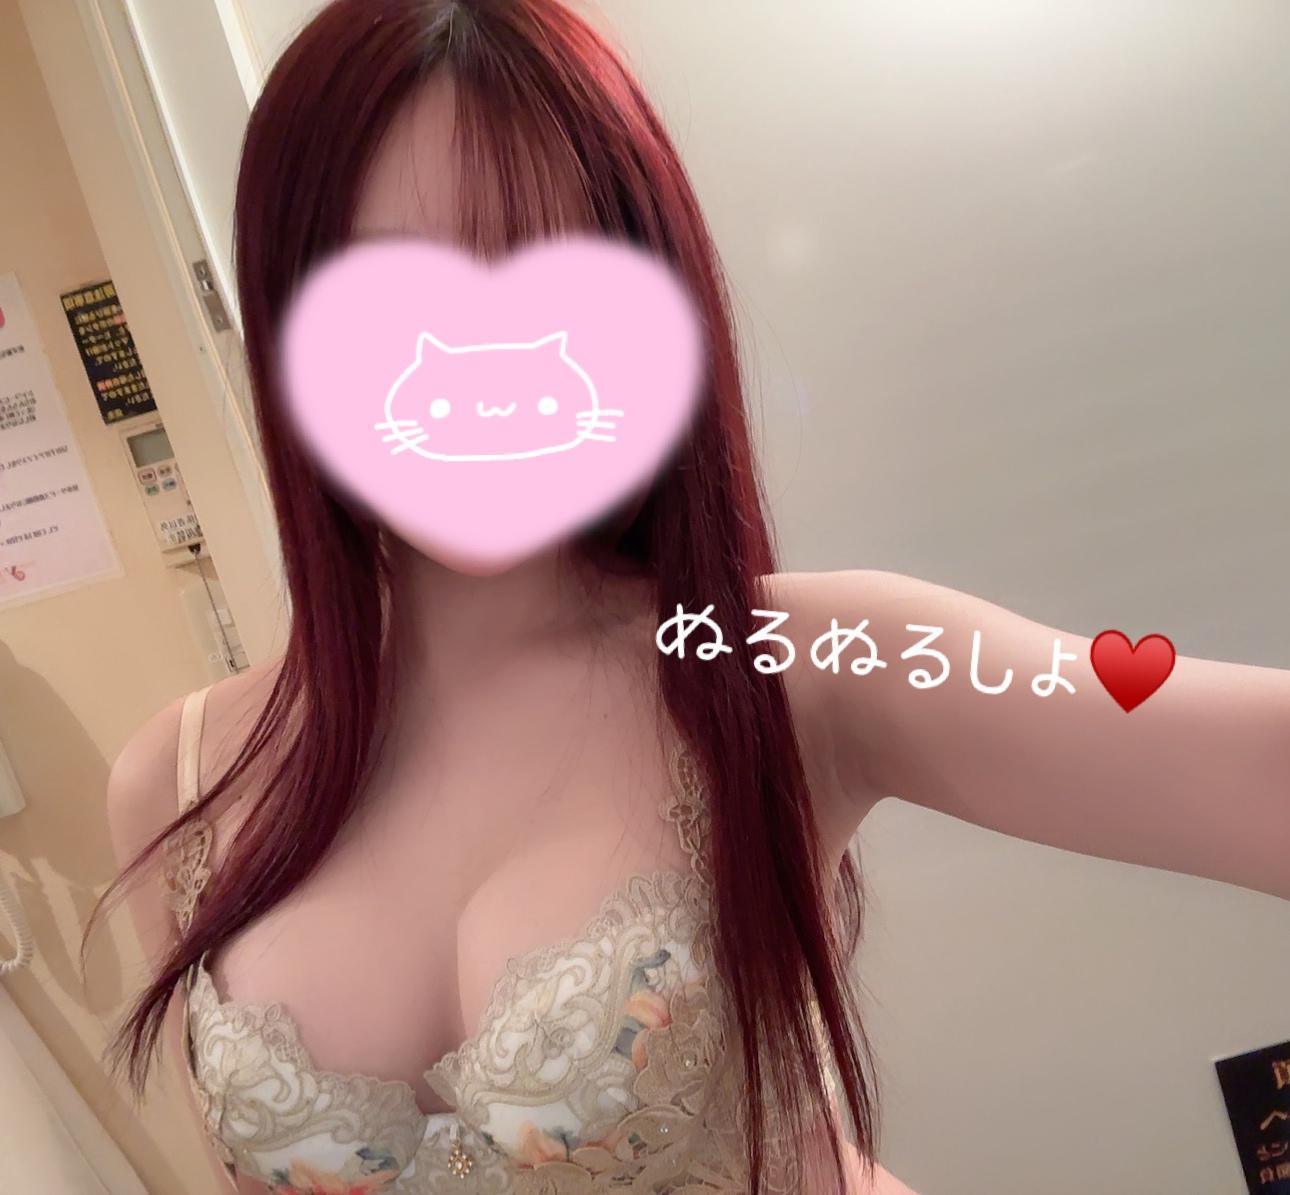 早番<img class="emojione" alt="💖" title=":sparkling_heart:" src="https://fuzoku.jp/assets/img/emojione/1f496.png"/>